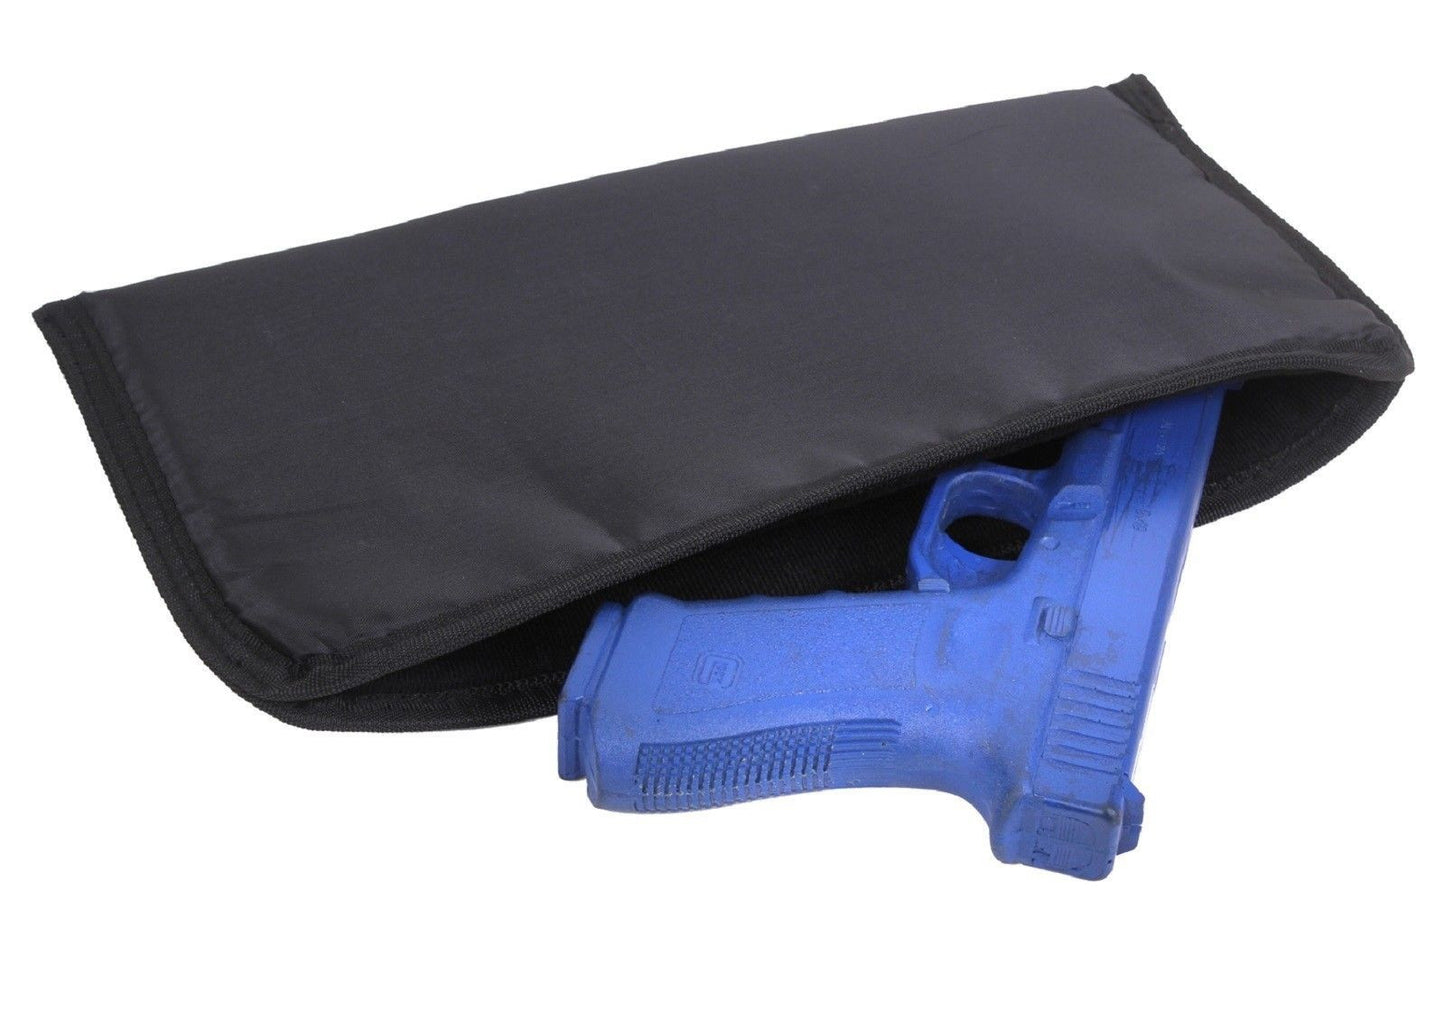 Black Technician Range Bag - Customizable MOLLE Tactical Bags